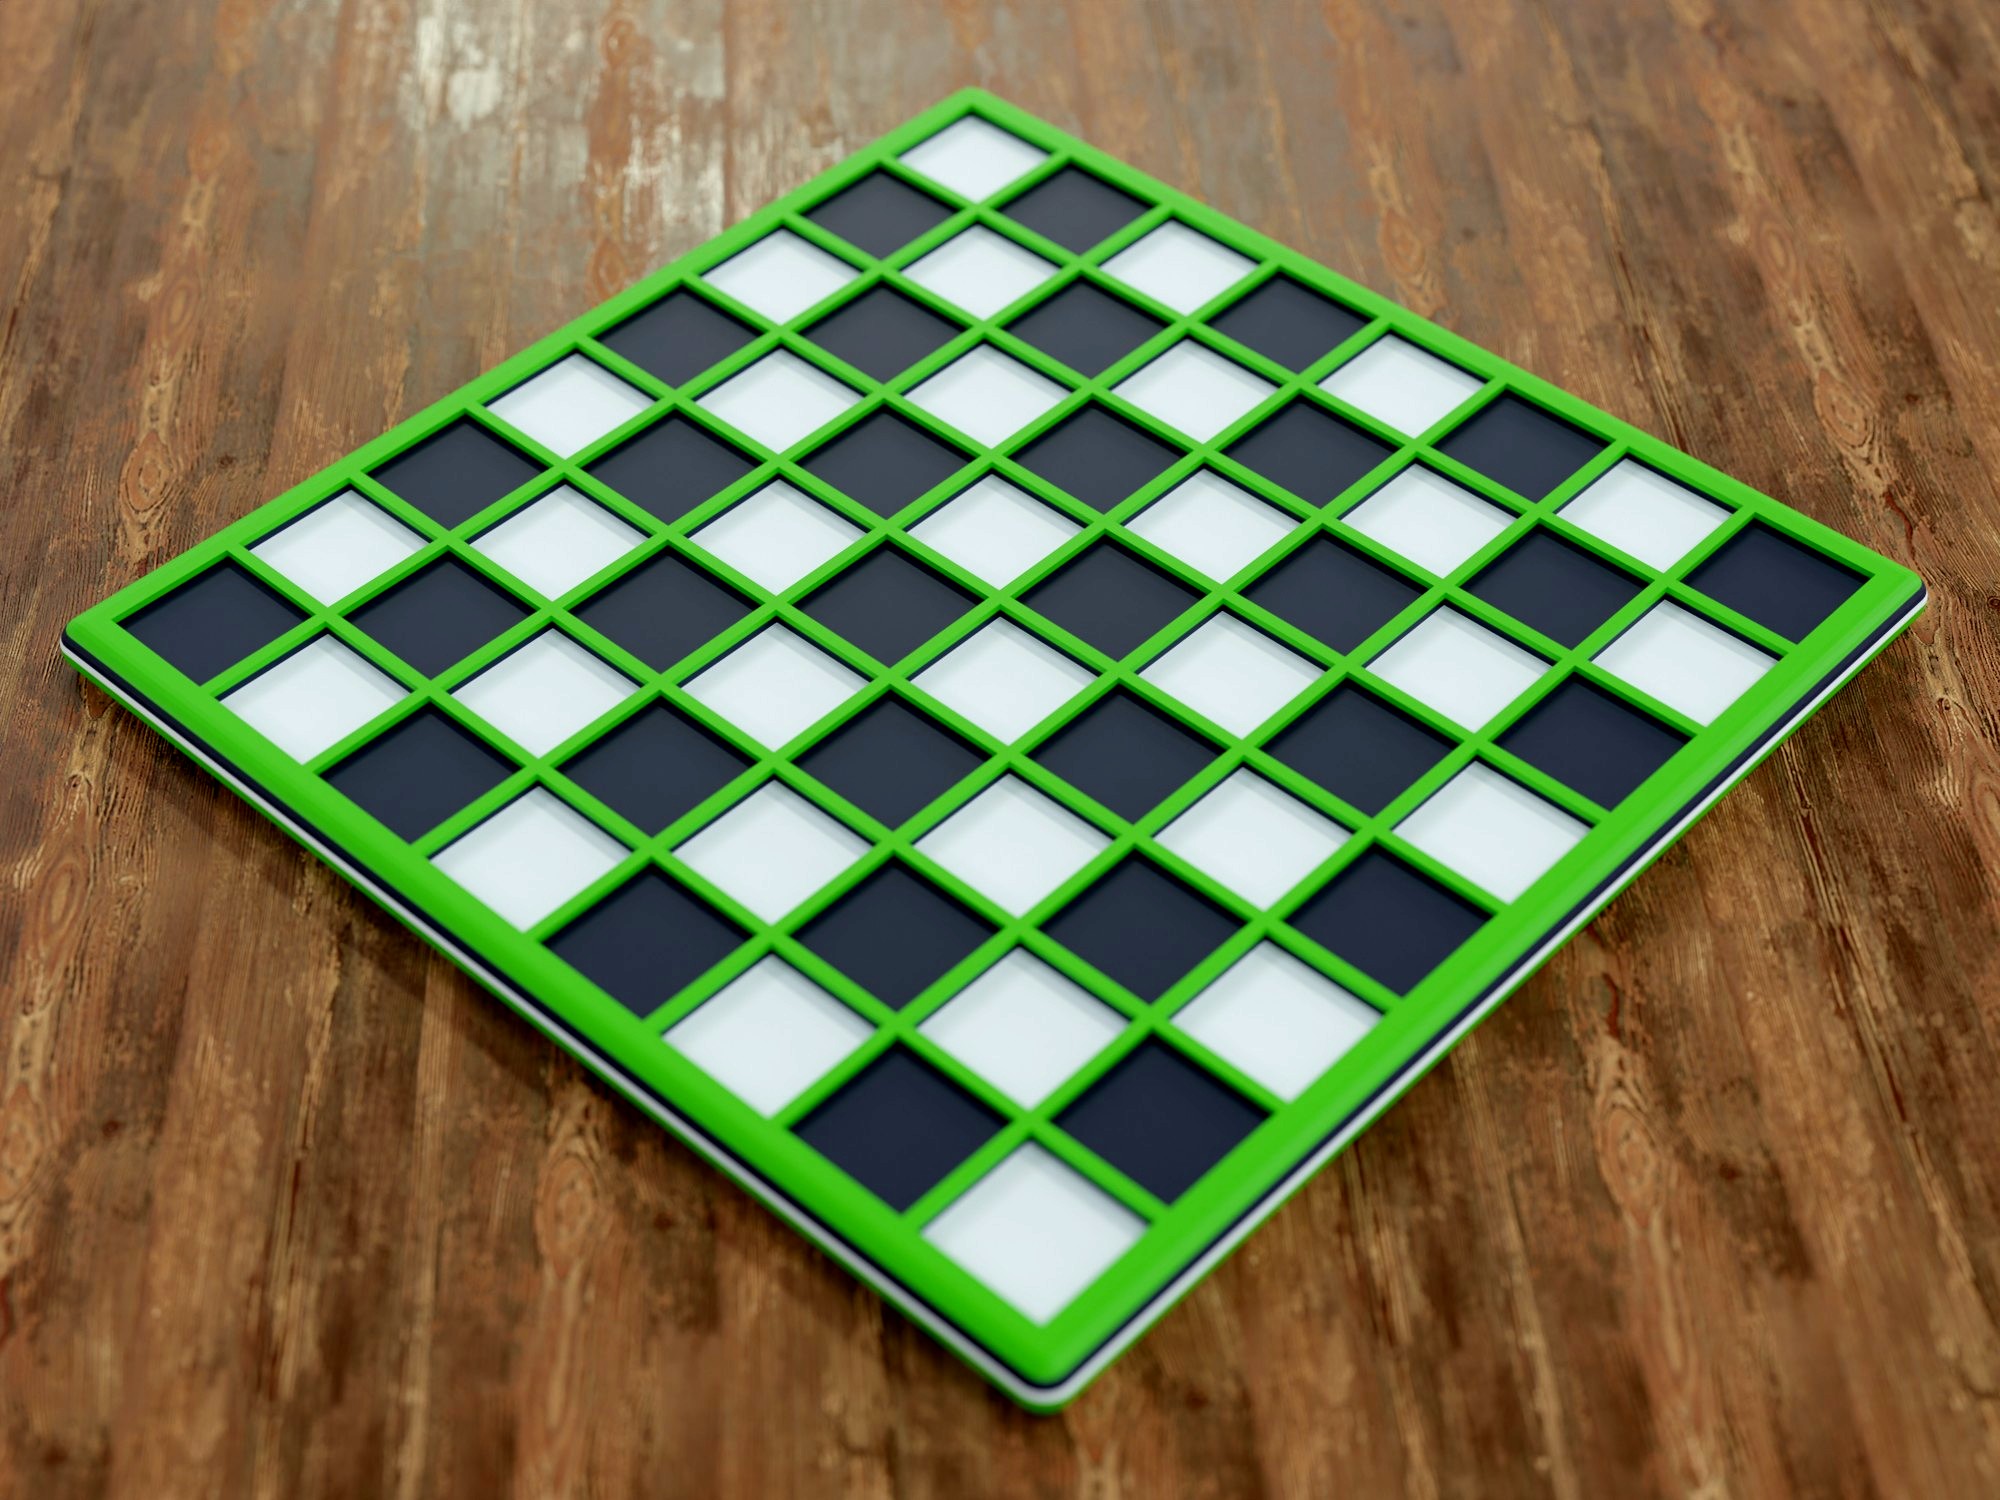 One print chess board